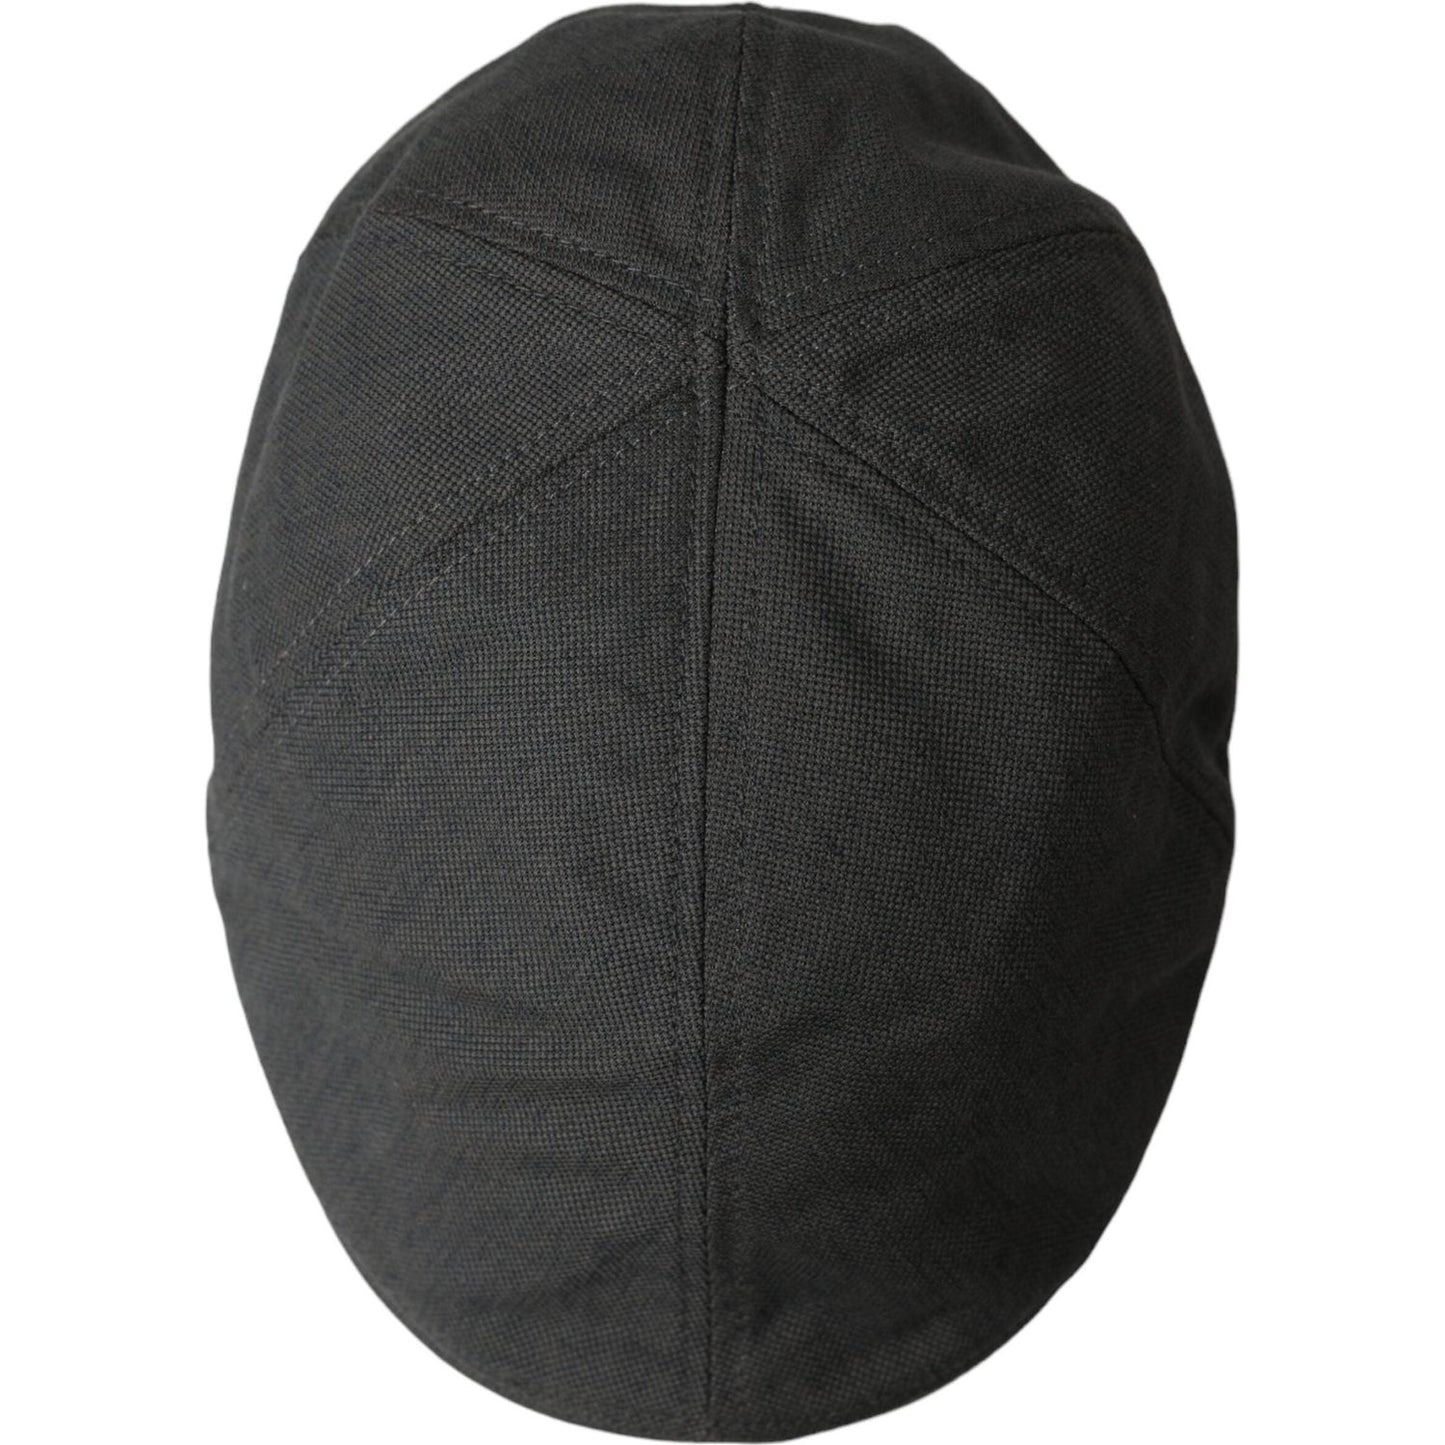 Dark Gray Nylon Cloth Newsboy Hat Men